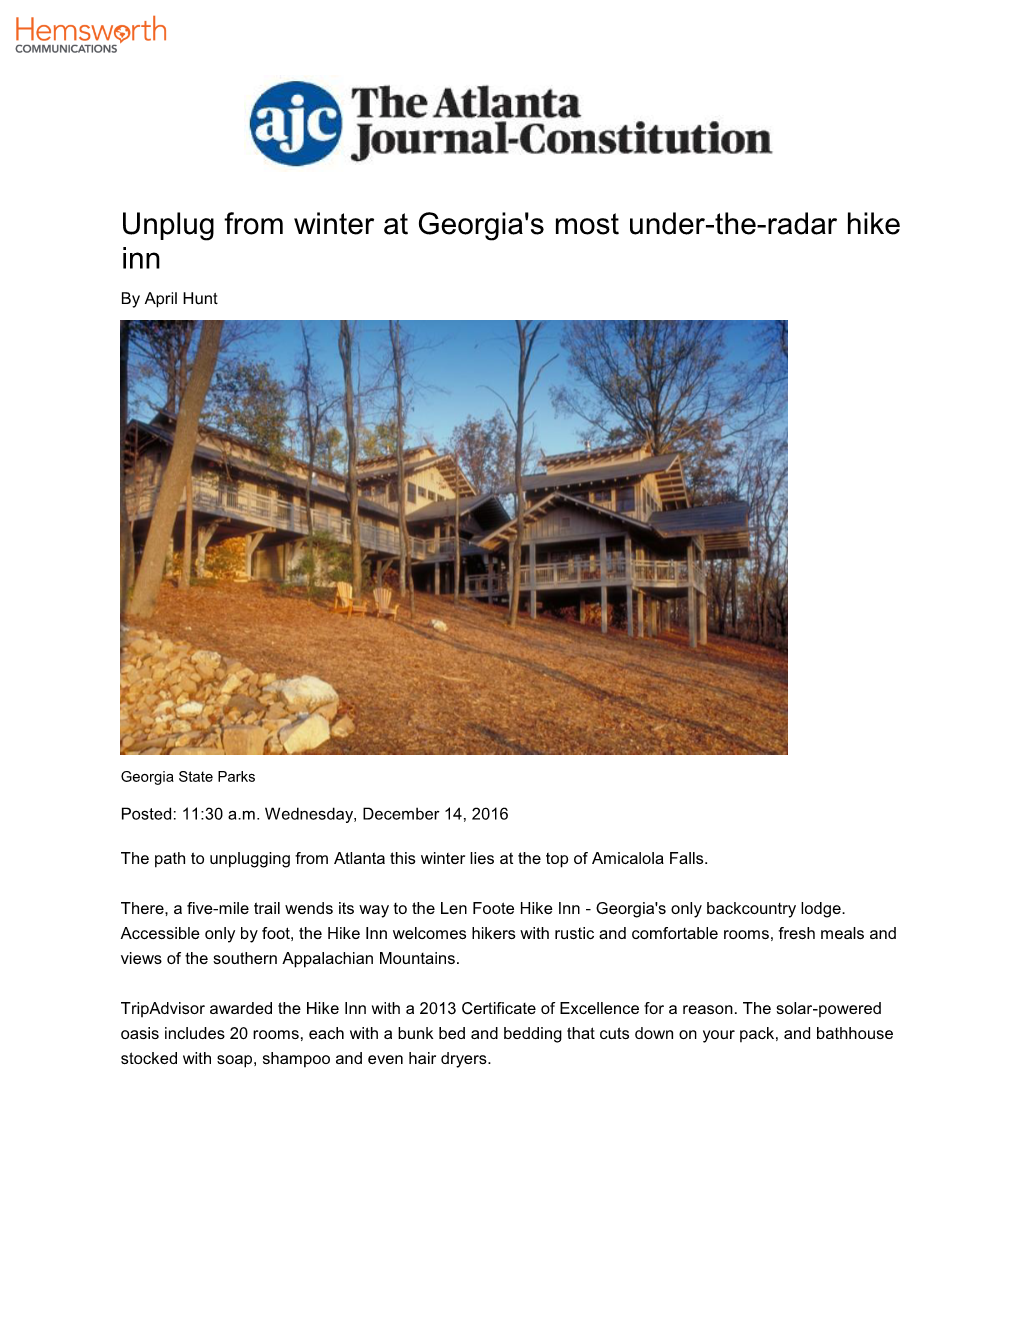 Unplug from Winter at Georgia's Most Under-The-Radar Hike Inn